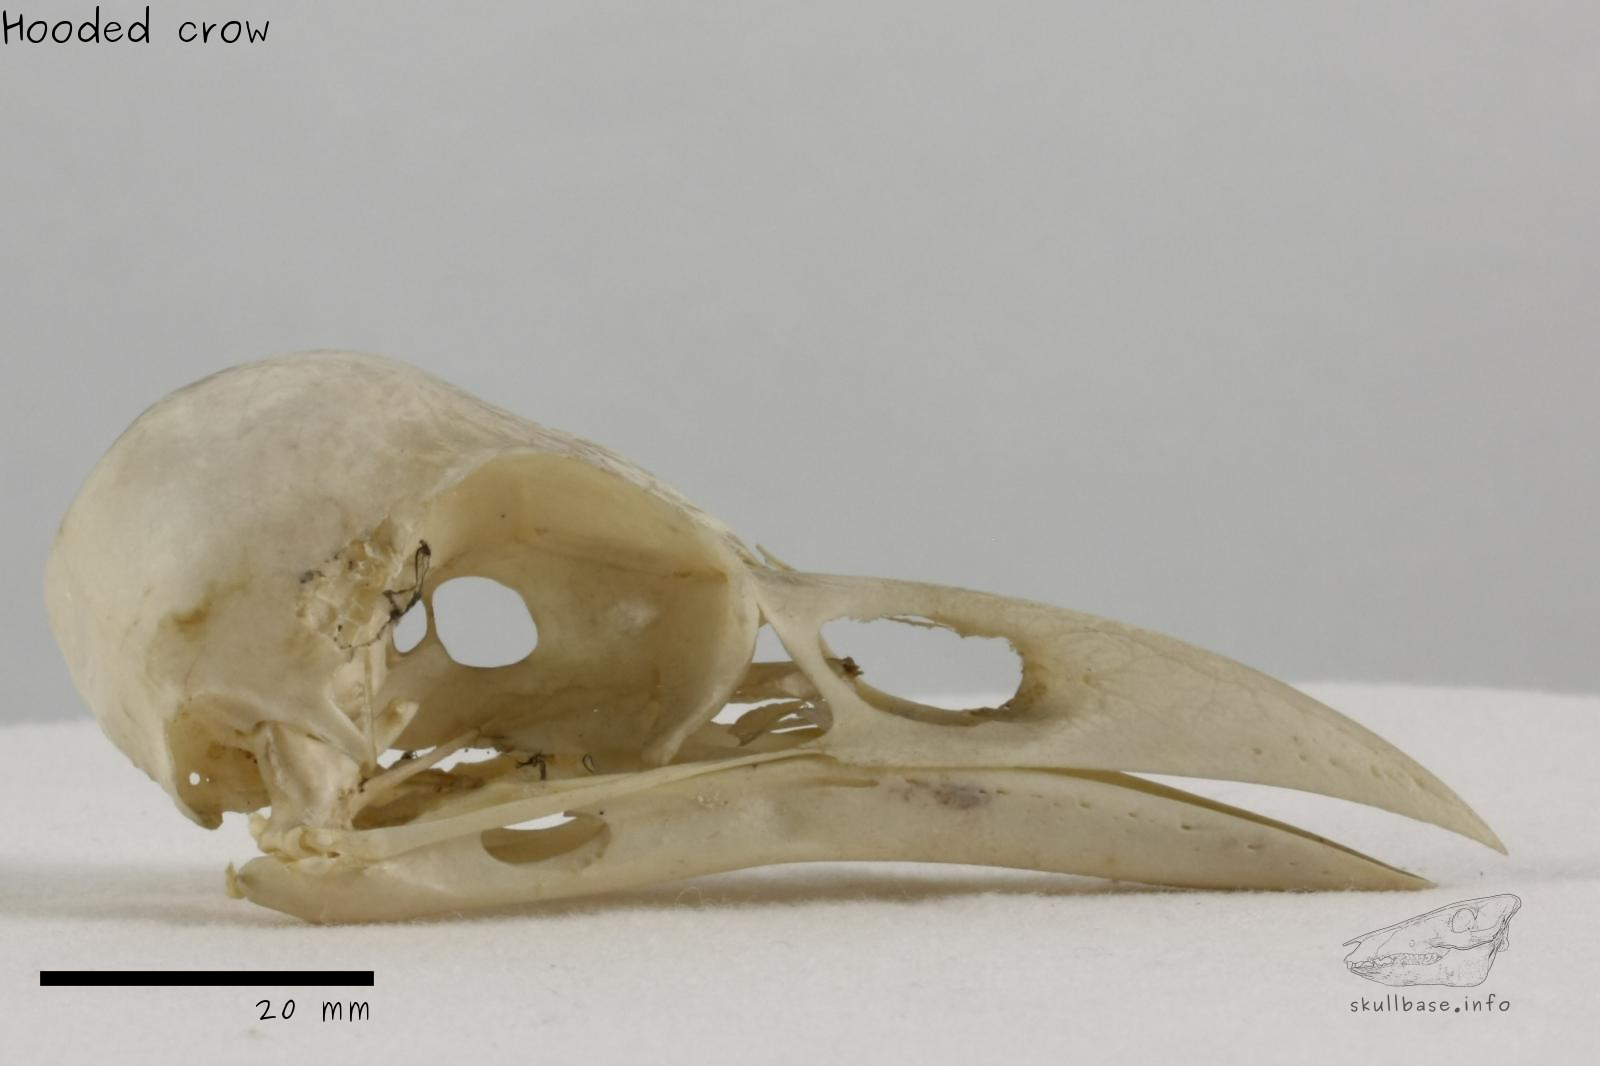 Hooded crow (Corvus cornix) skull lateral view